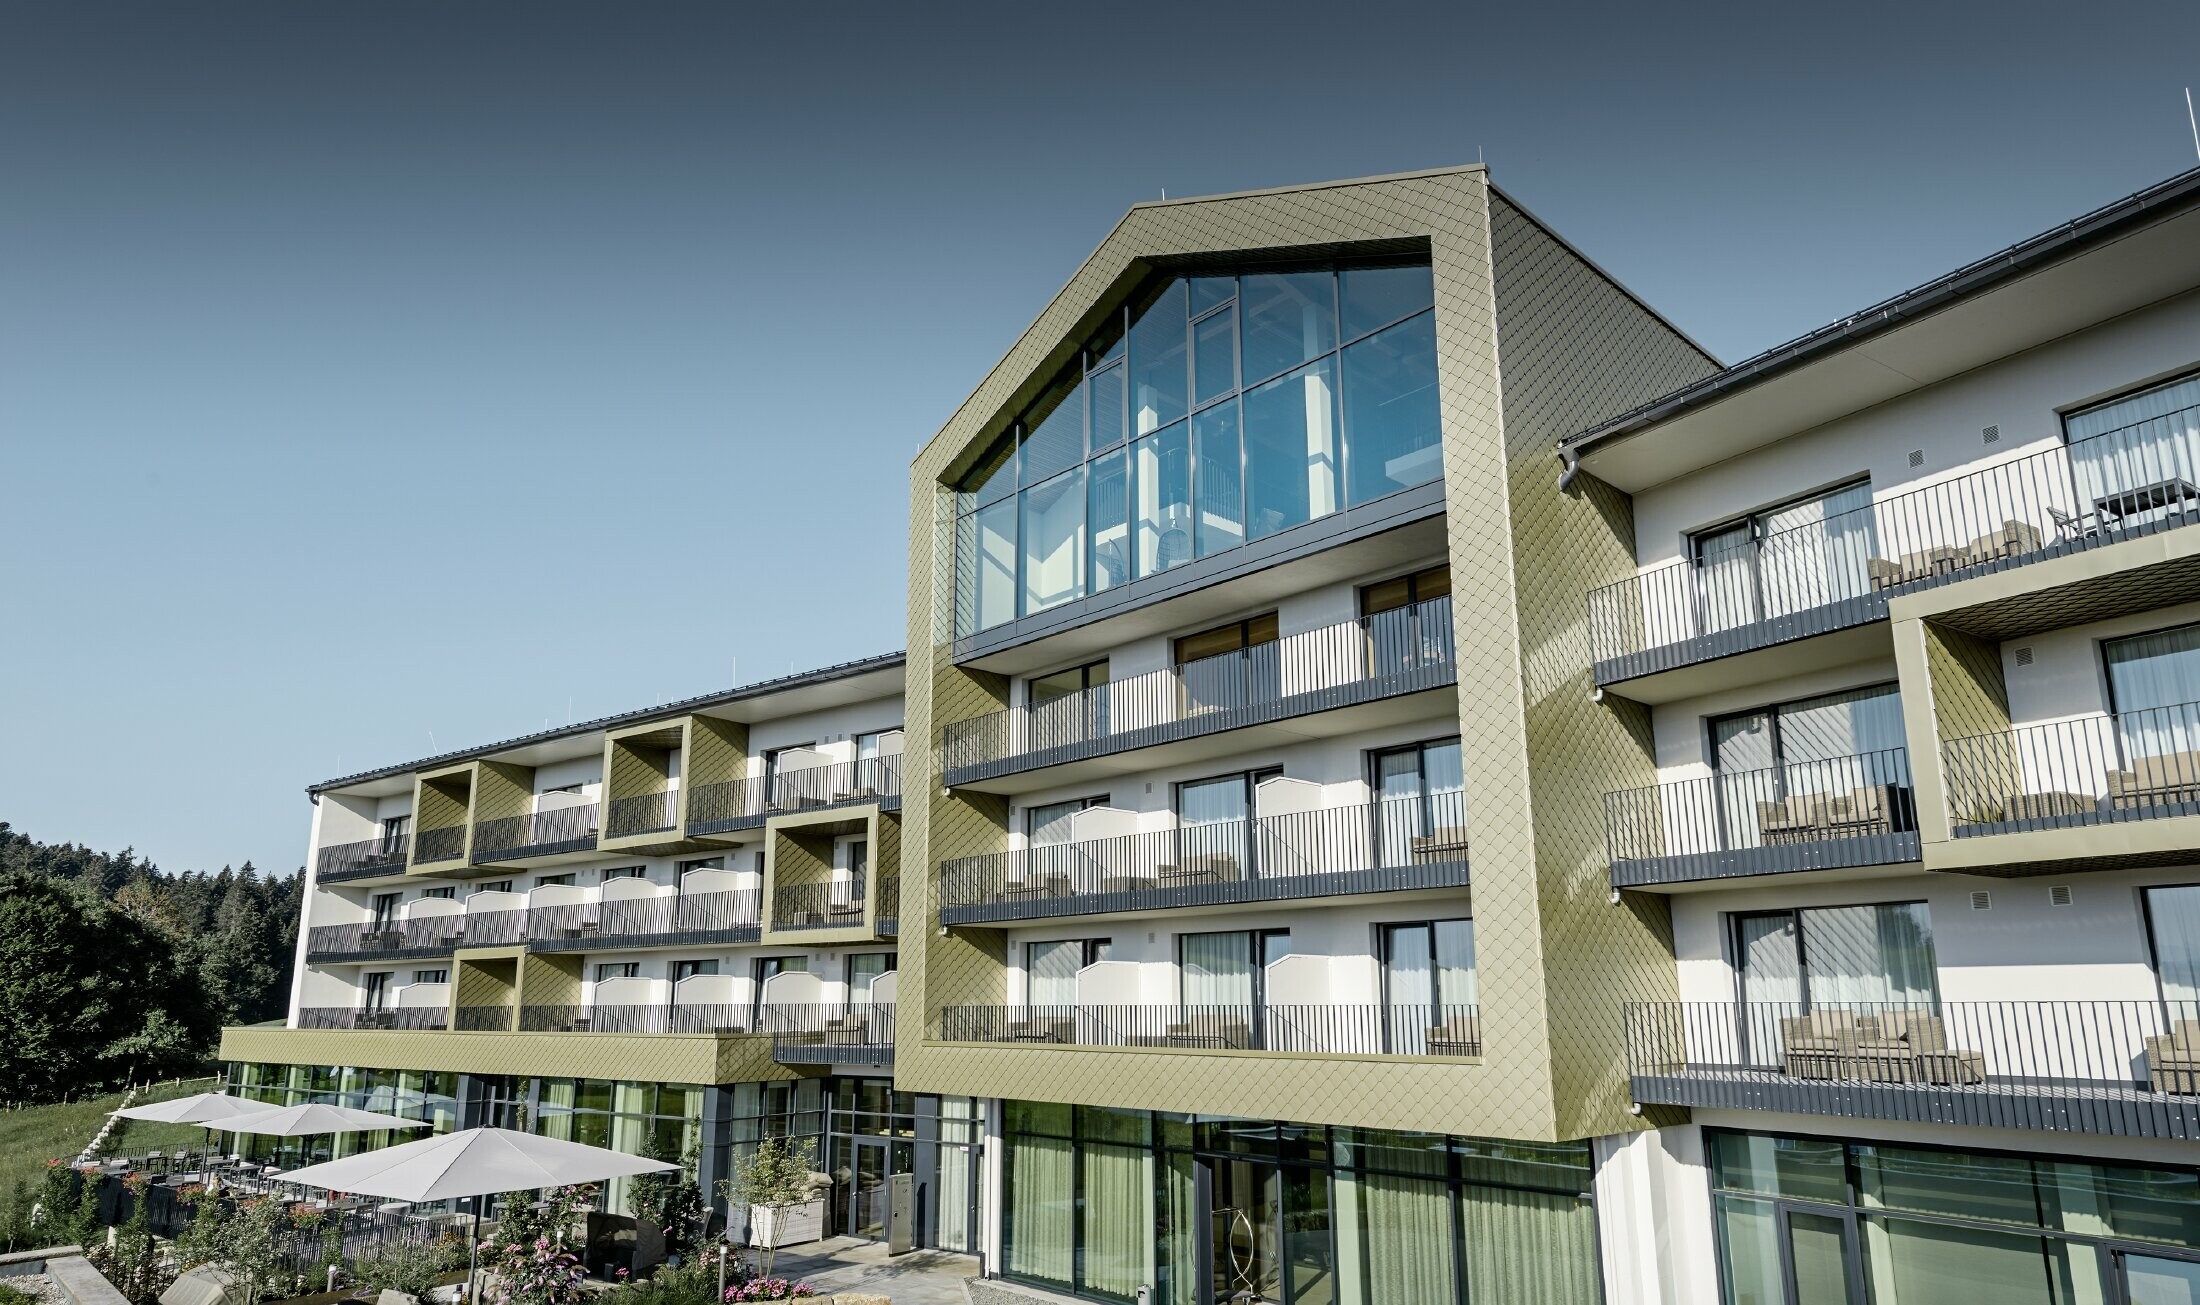 Façade design of Hotel Edita in Scheidegg with the PREFA 20 x 20 aluminium rhomboid tile in the special light bronze colour.